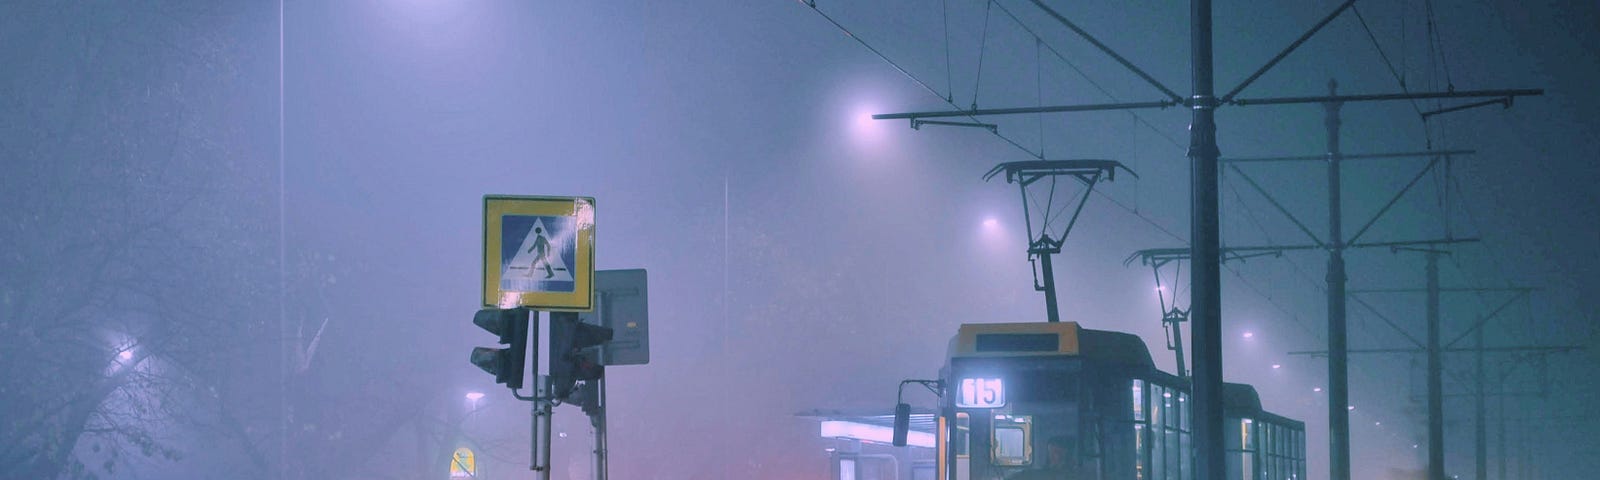 Trams in the mist